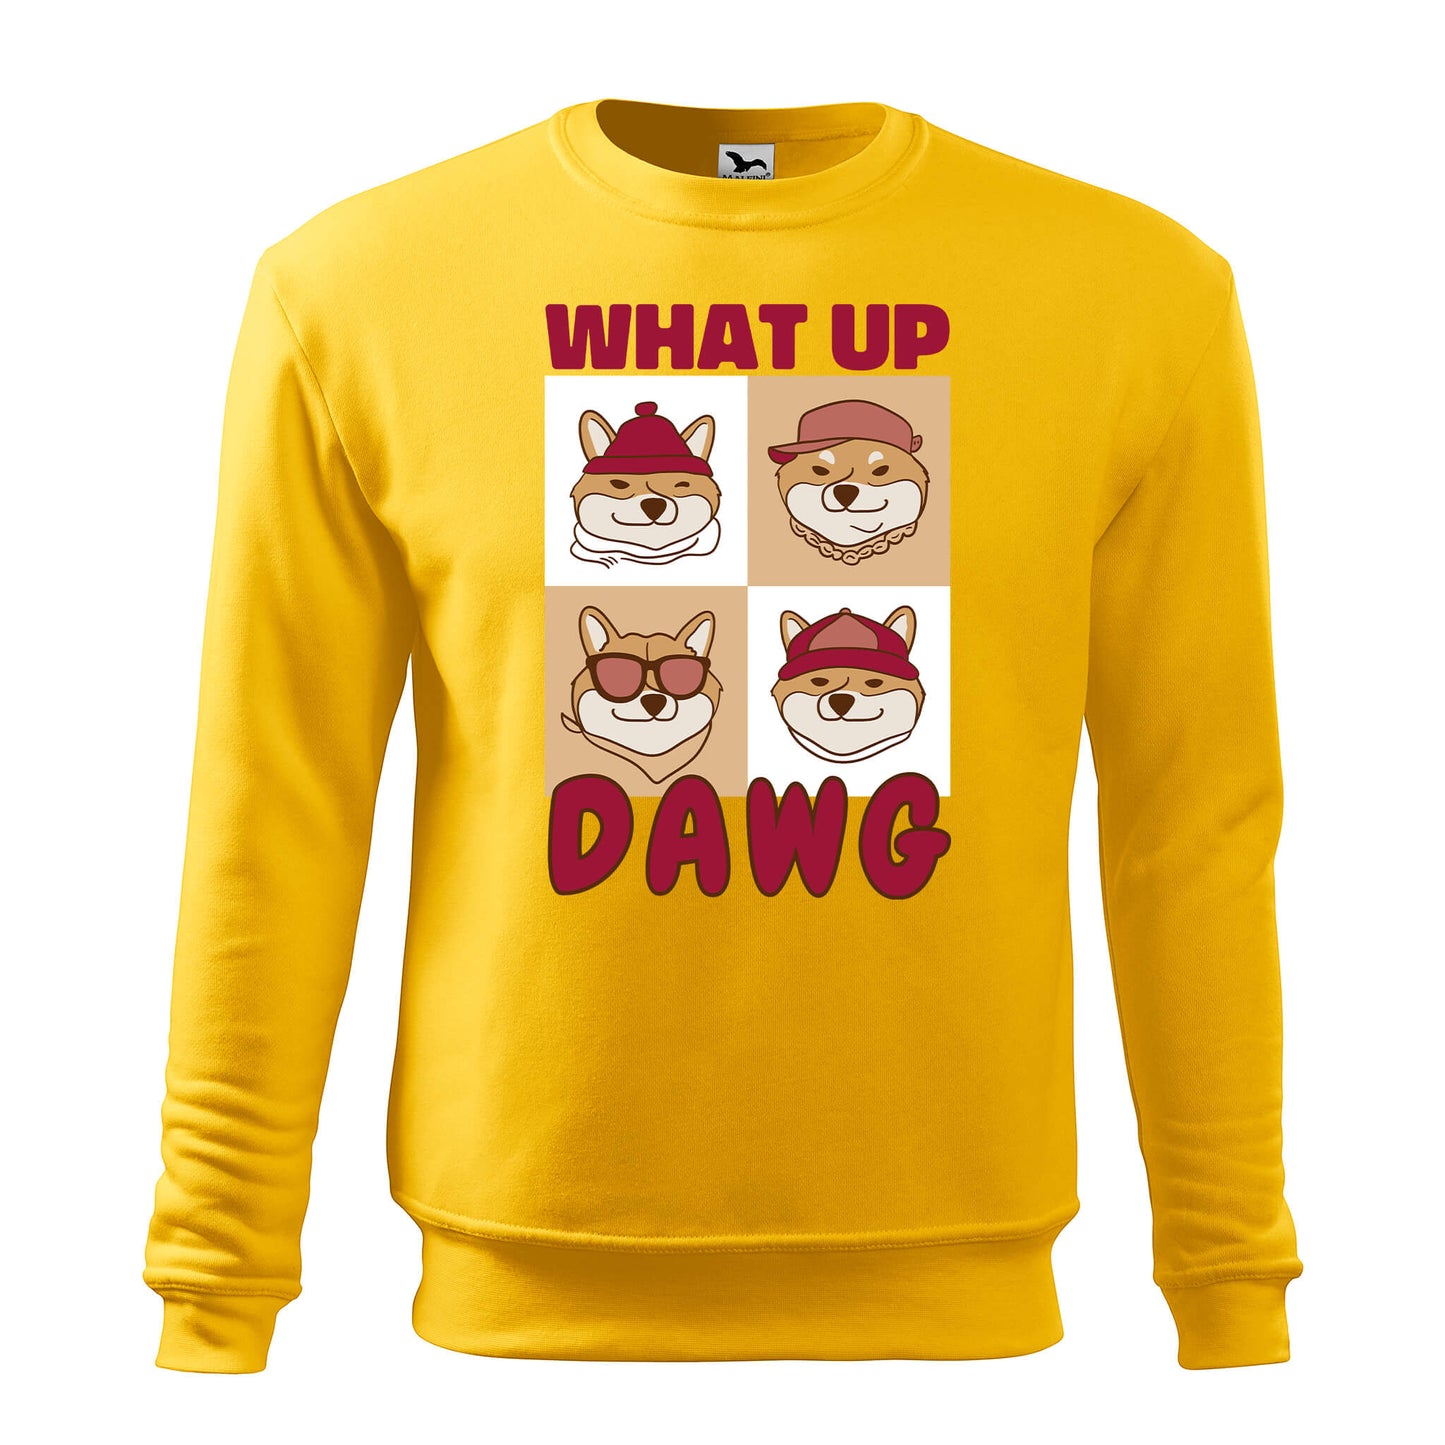 What up dawg sweatshirt - mens